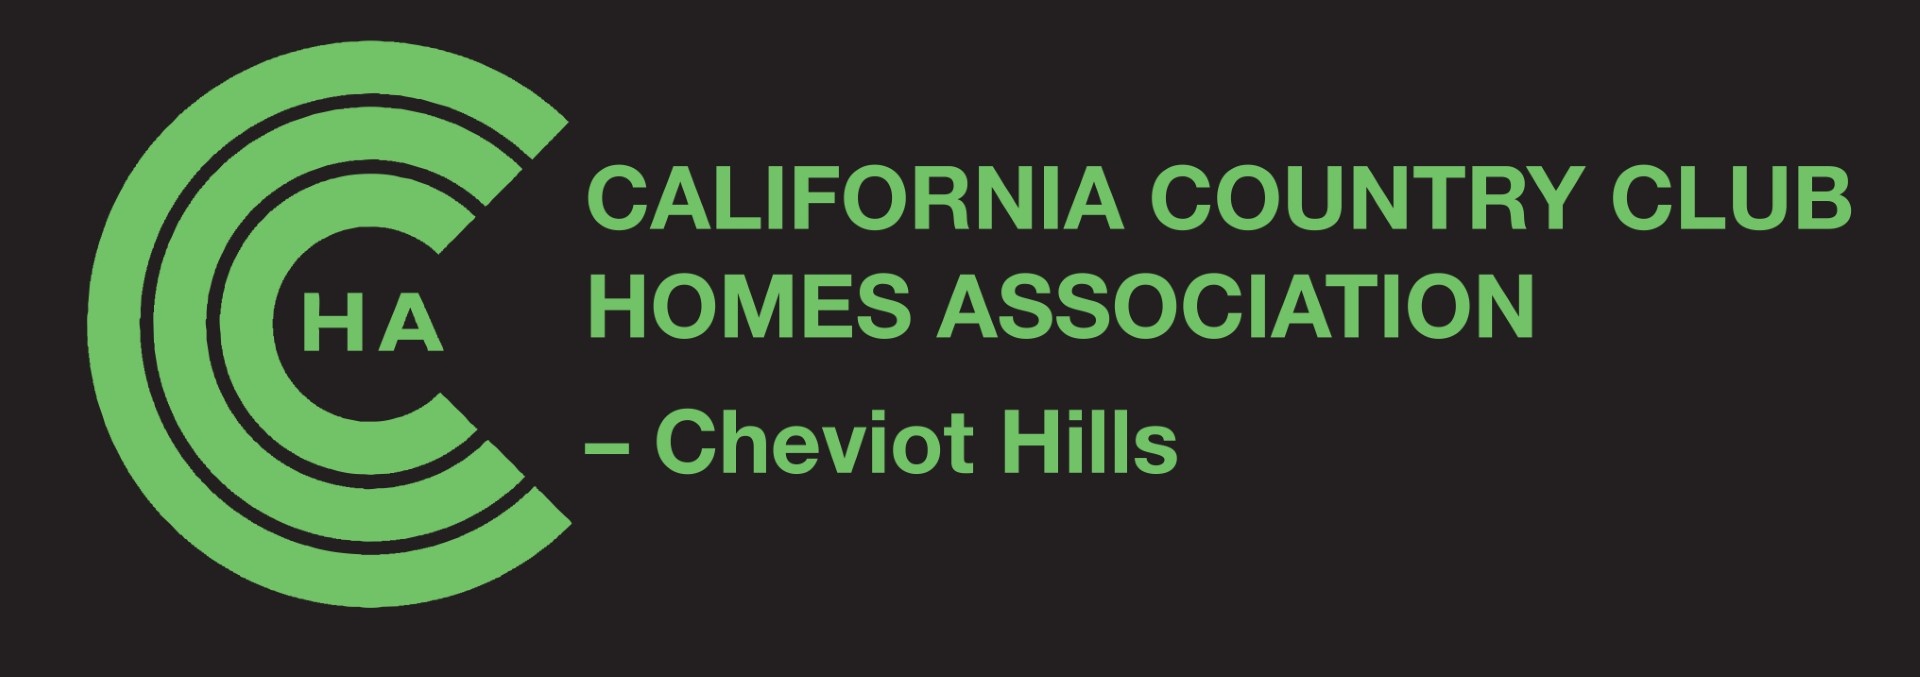 california country club homes association